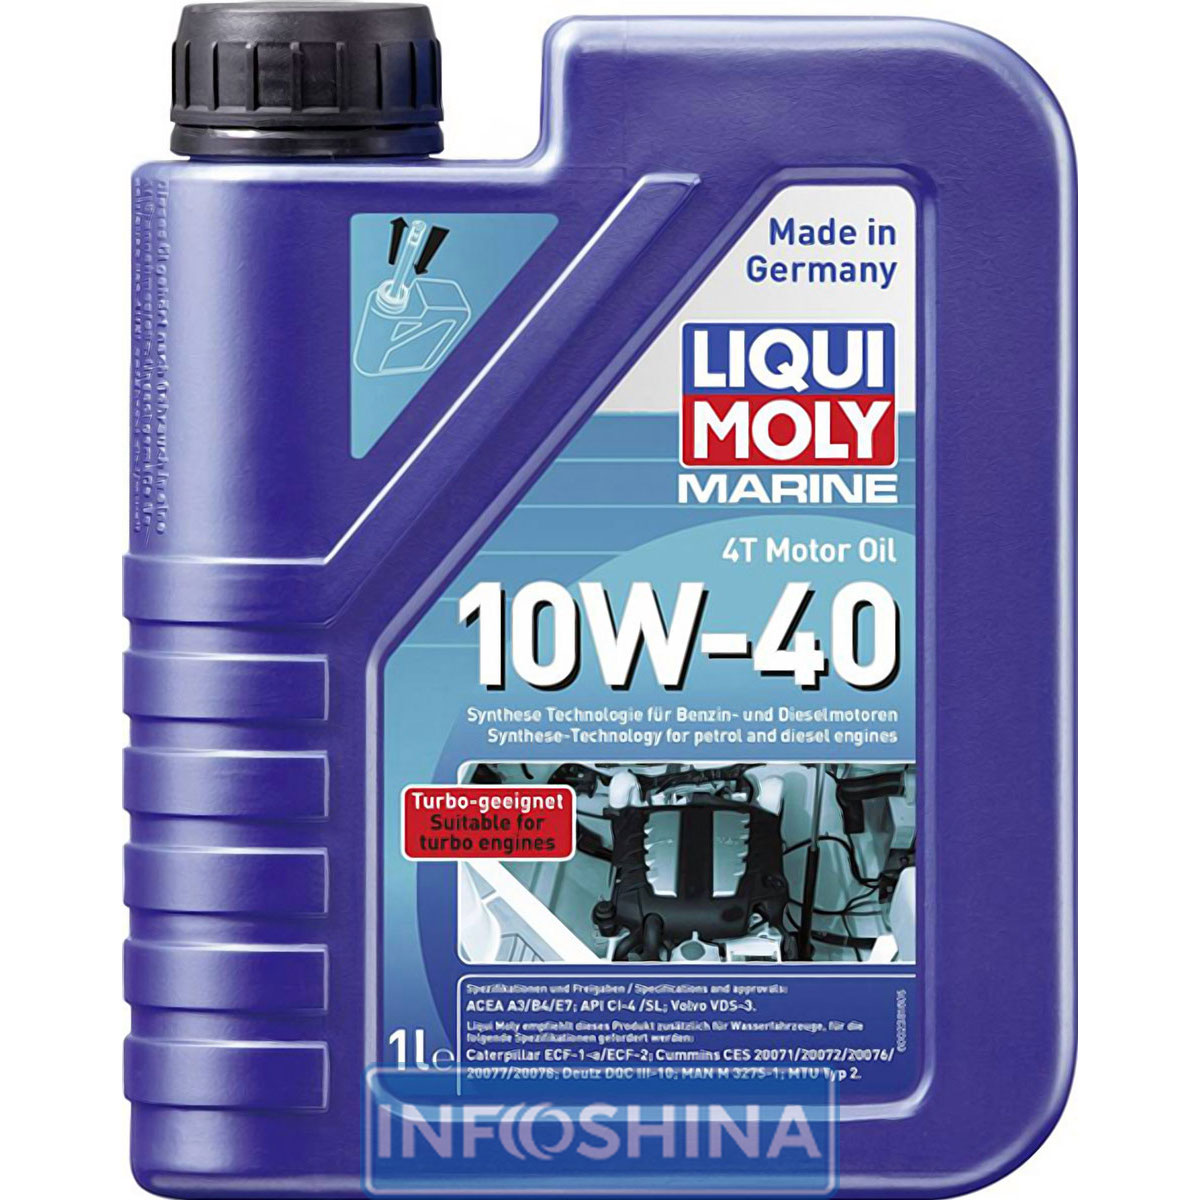 Liqui Moly Marine Motor oil 4T 10W-40